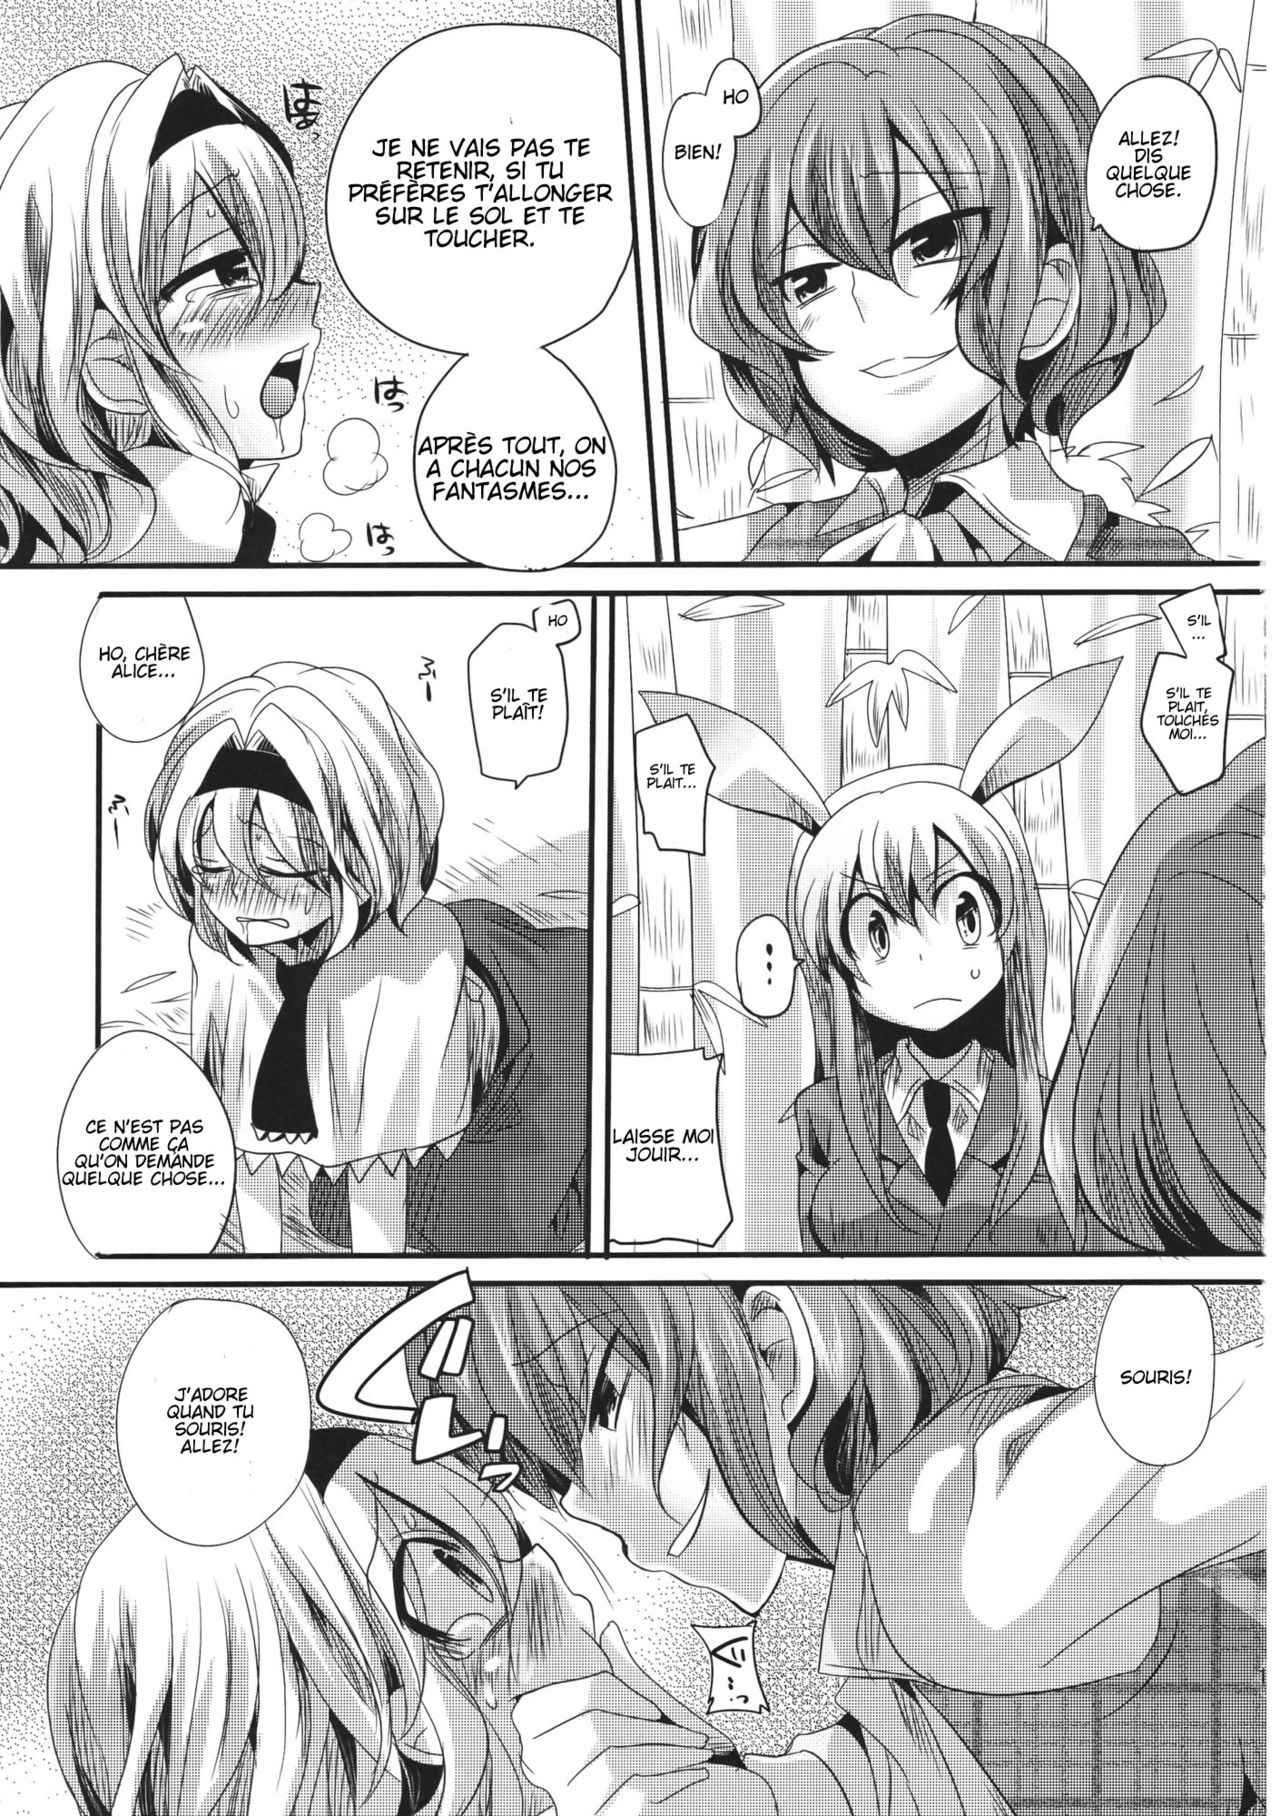 (Reitaisai 8) [DOUMOU] Yuuka is a Sadist while Alice is a Masochist (Touhou Project)[FR] 